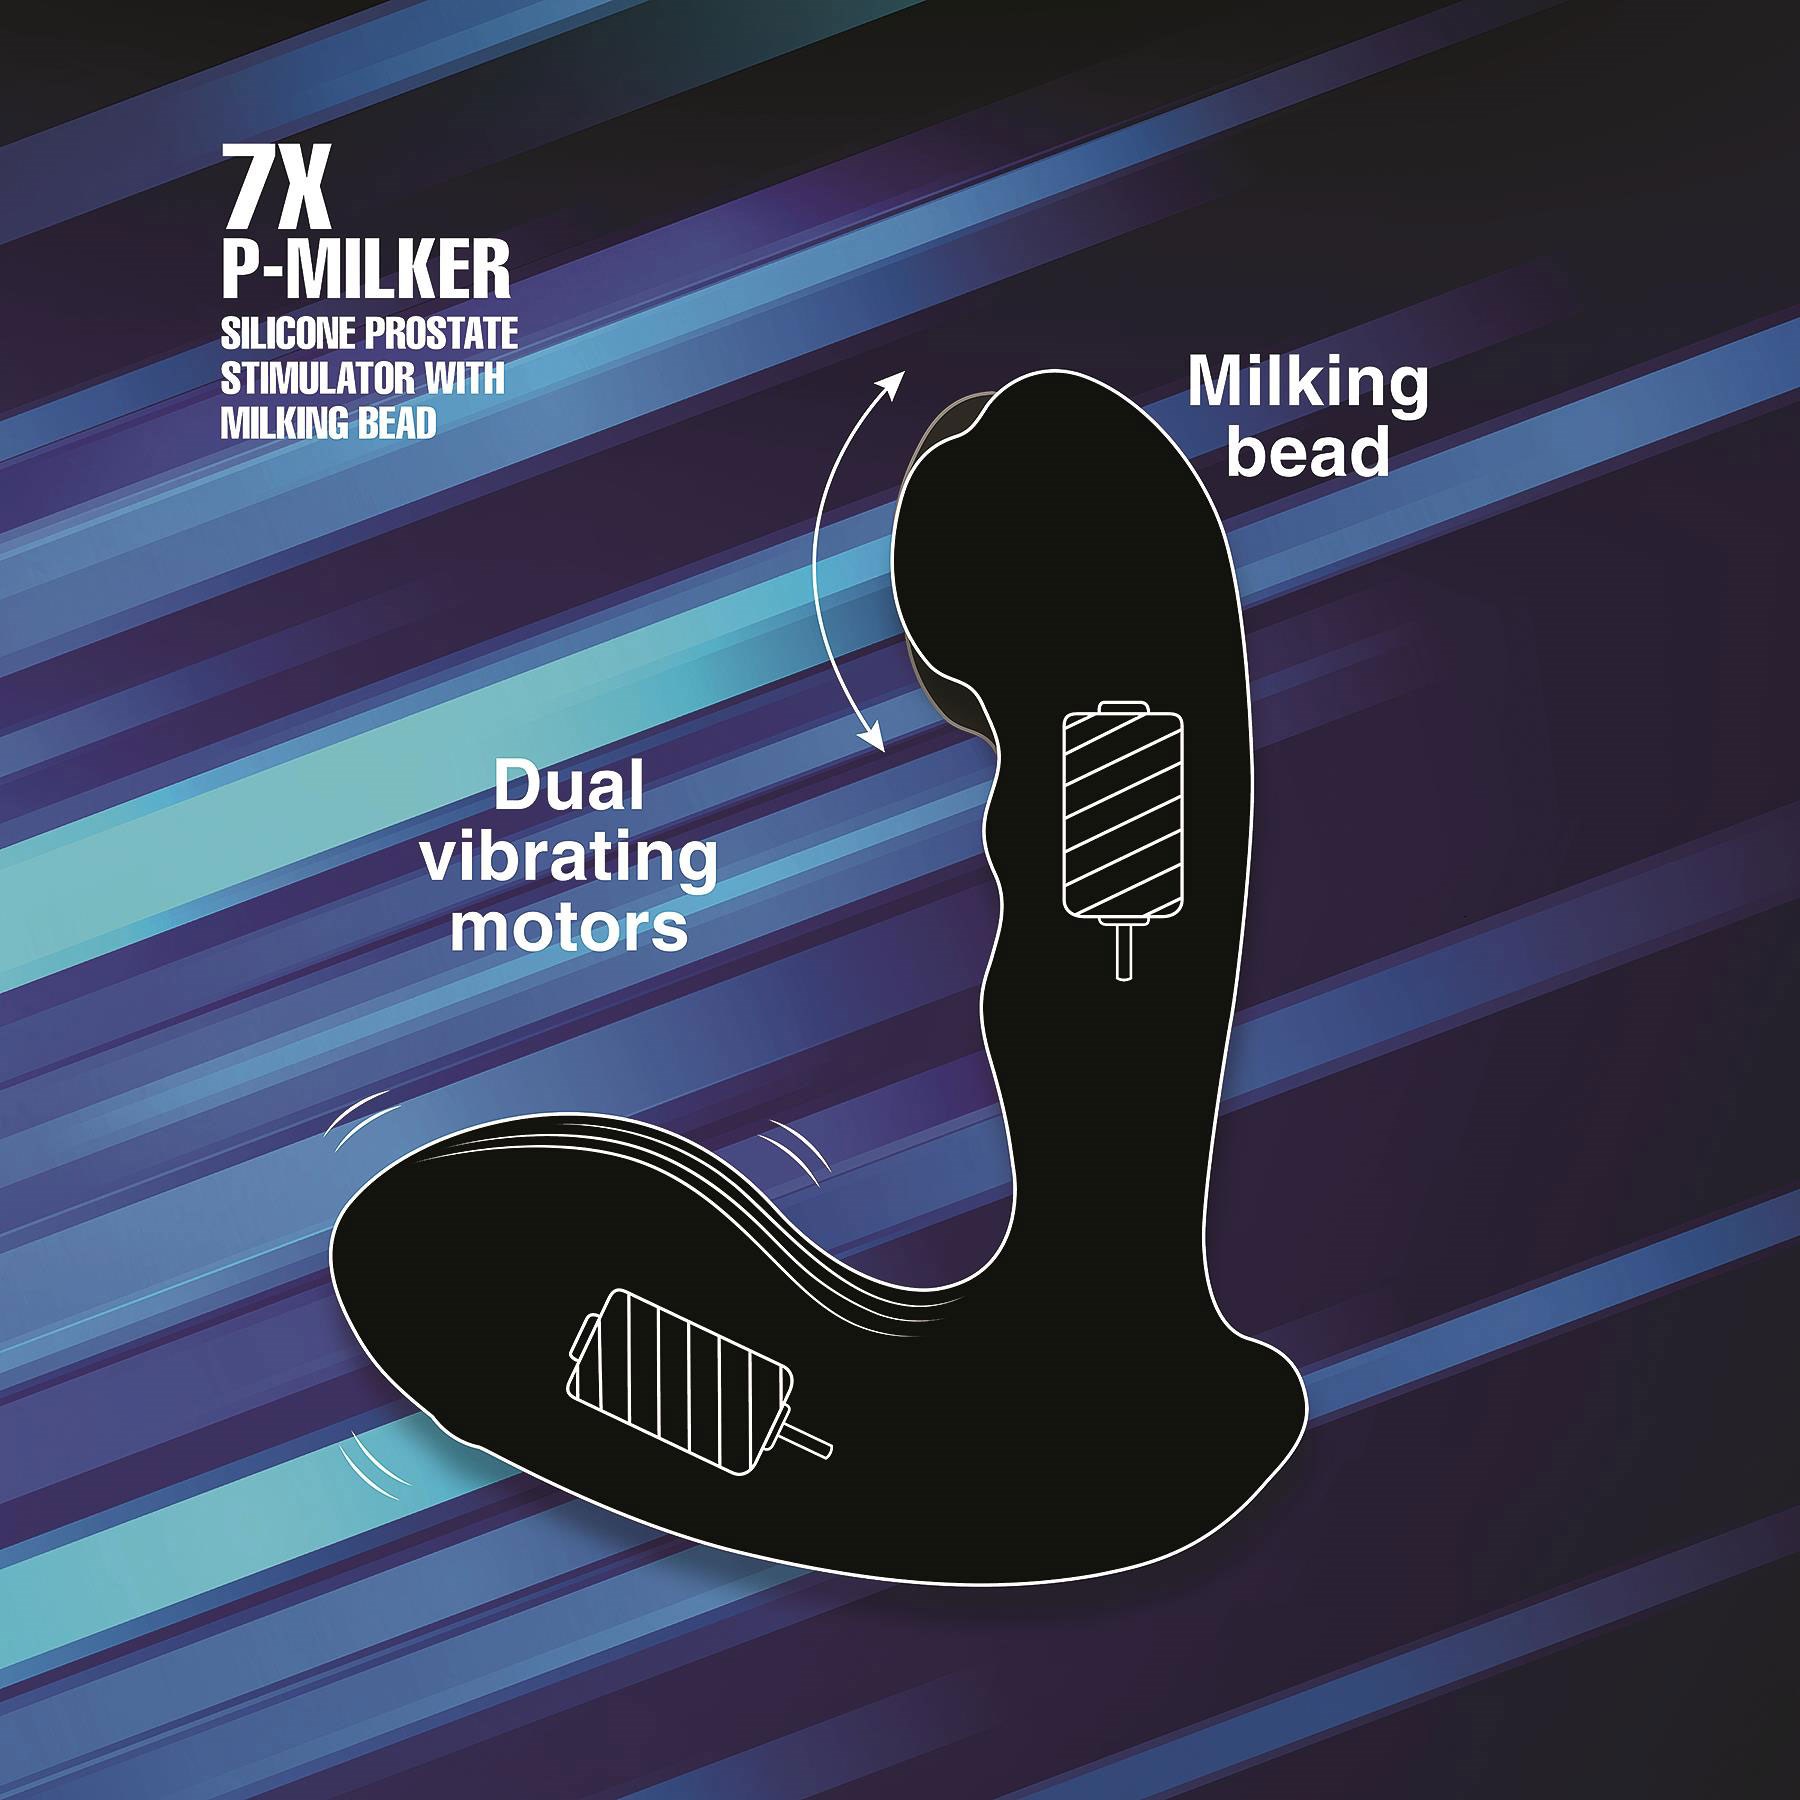 Alpha Pro 7Xp Milker Massager features illustration